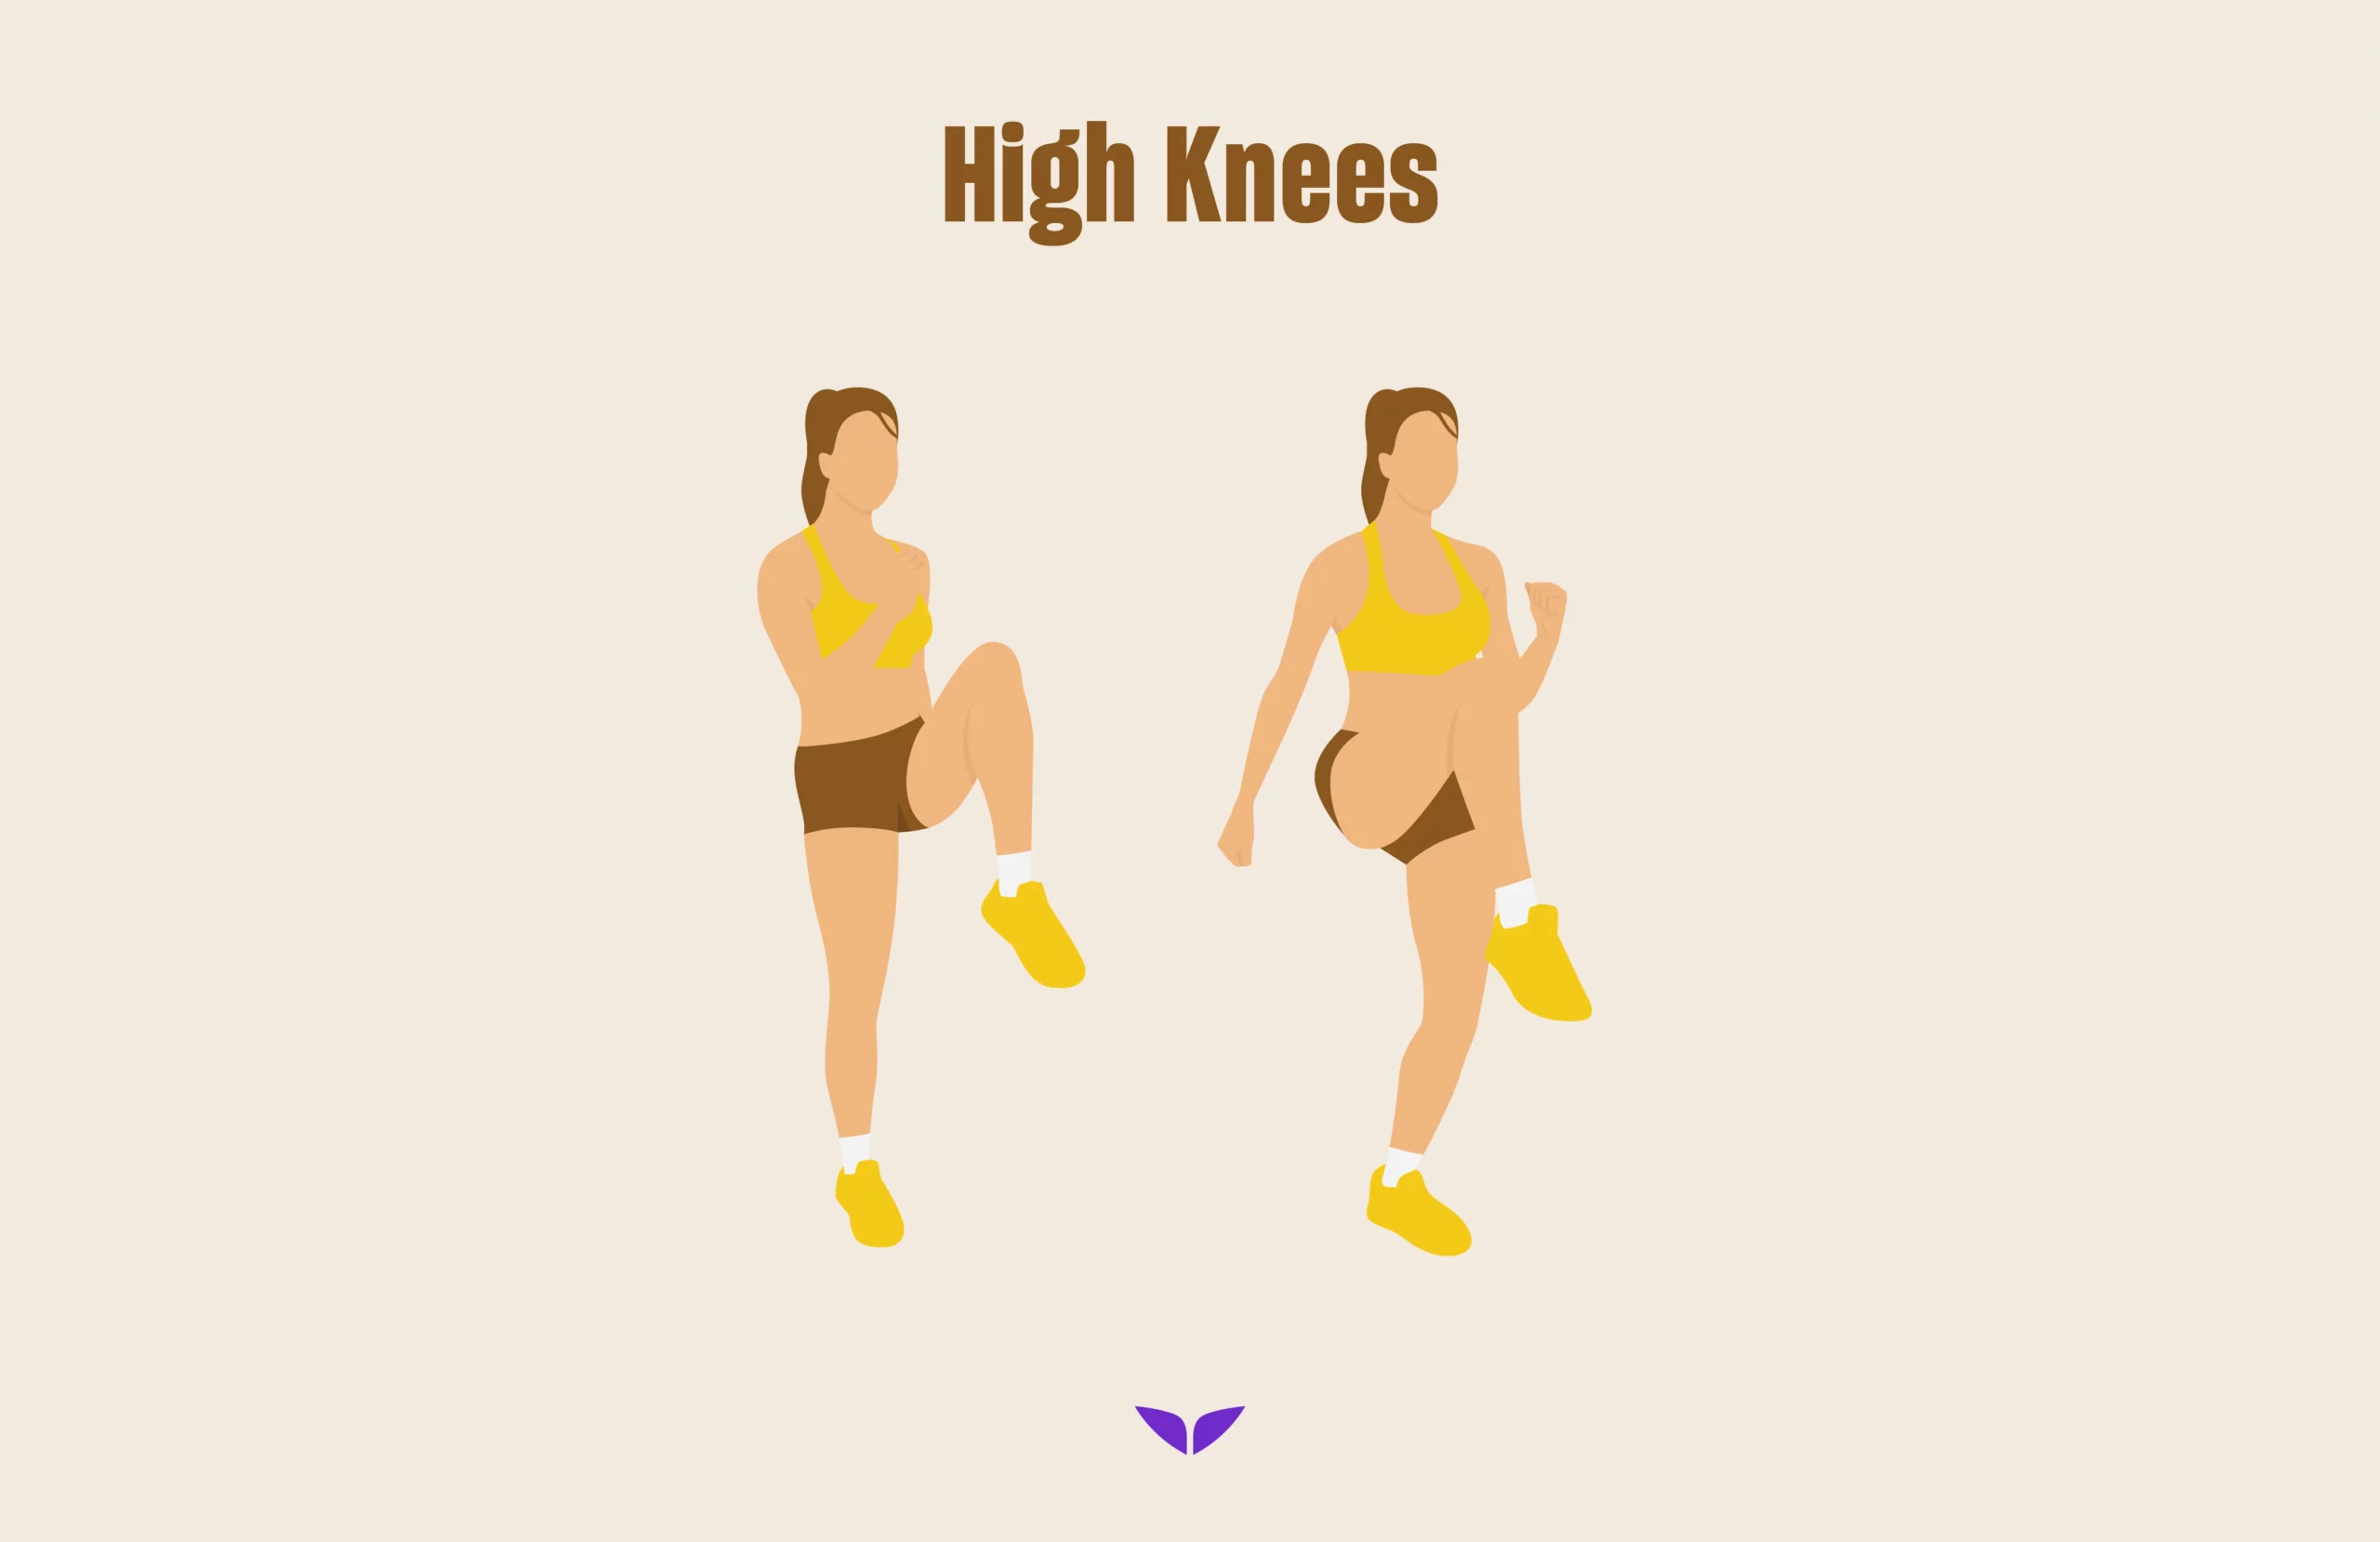 High knees